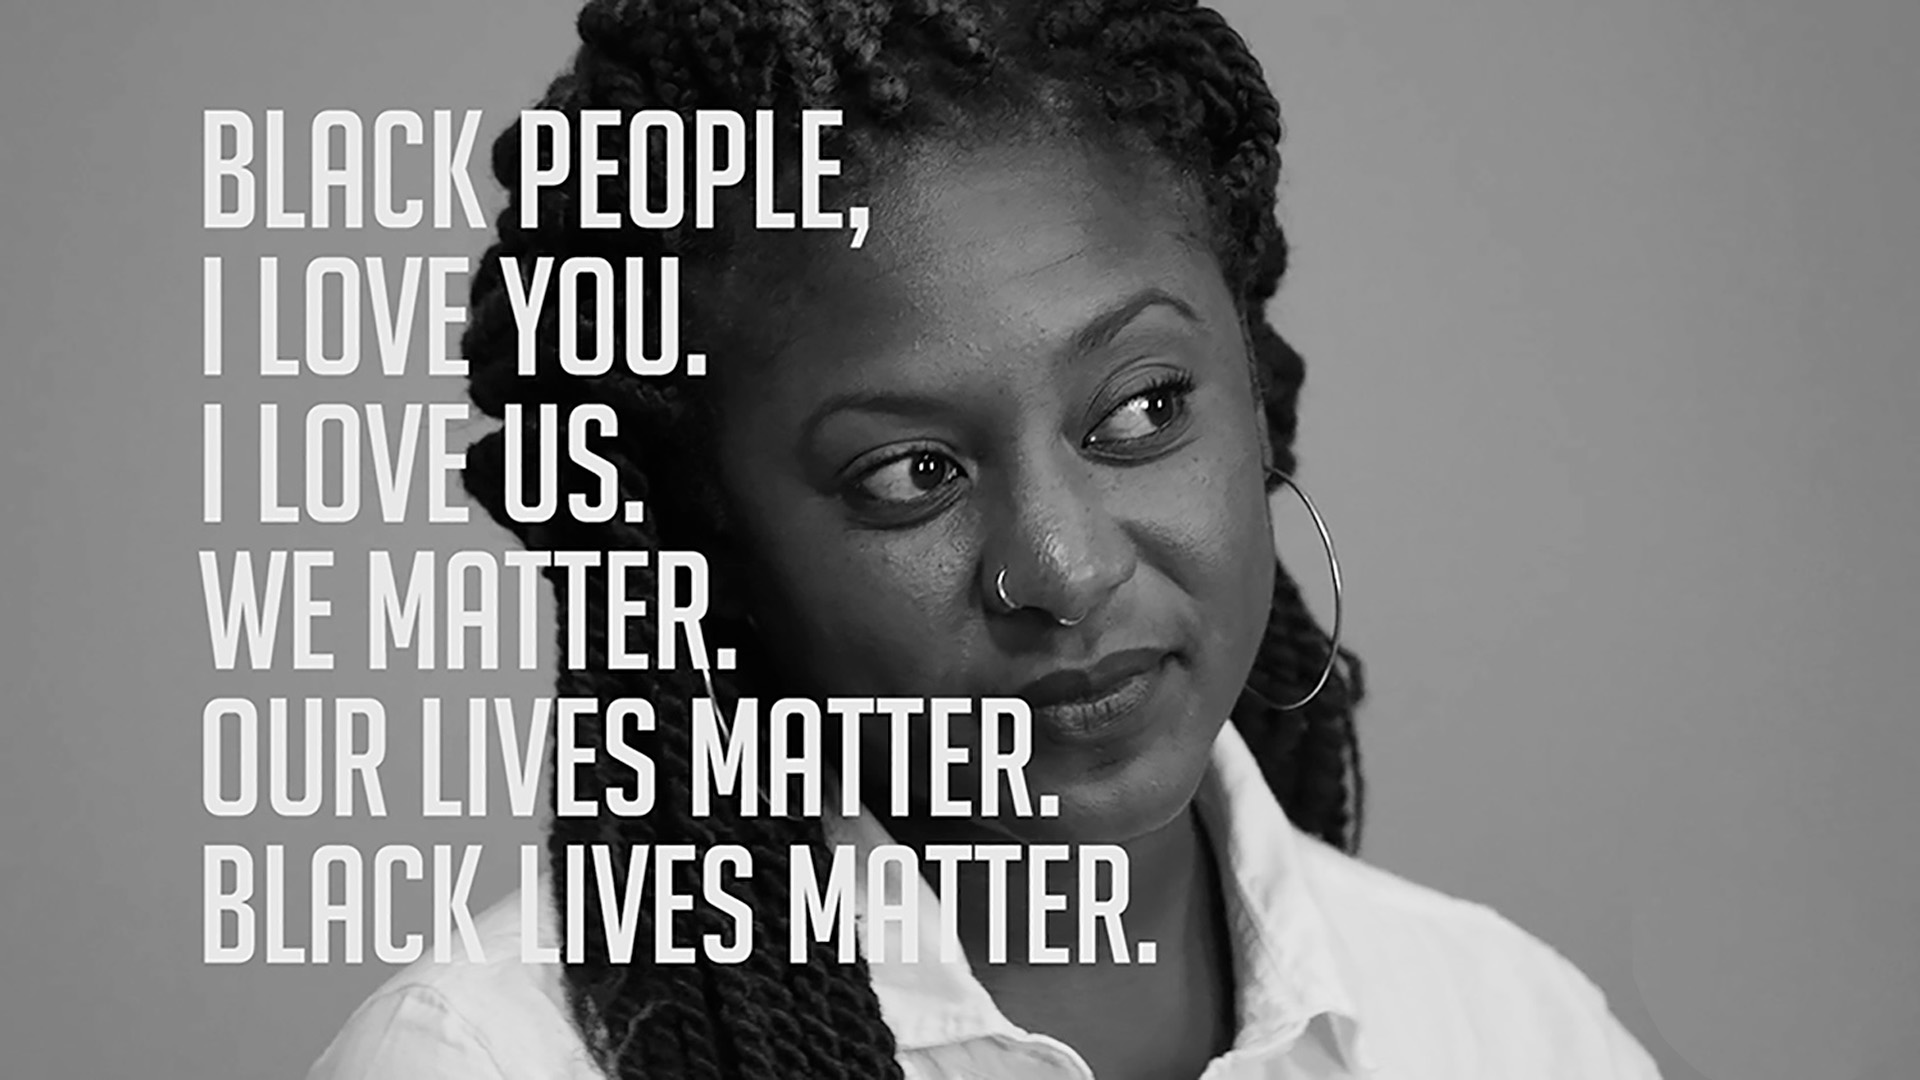 Alicia Garza under the text 'Black people, I love you. I love us. We matter. Our lives matter. Black lives matter.'